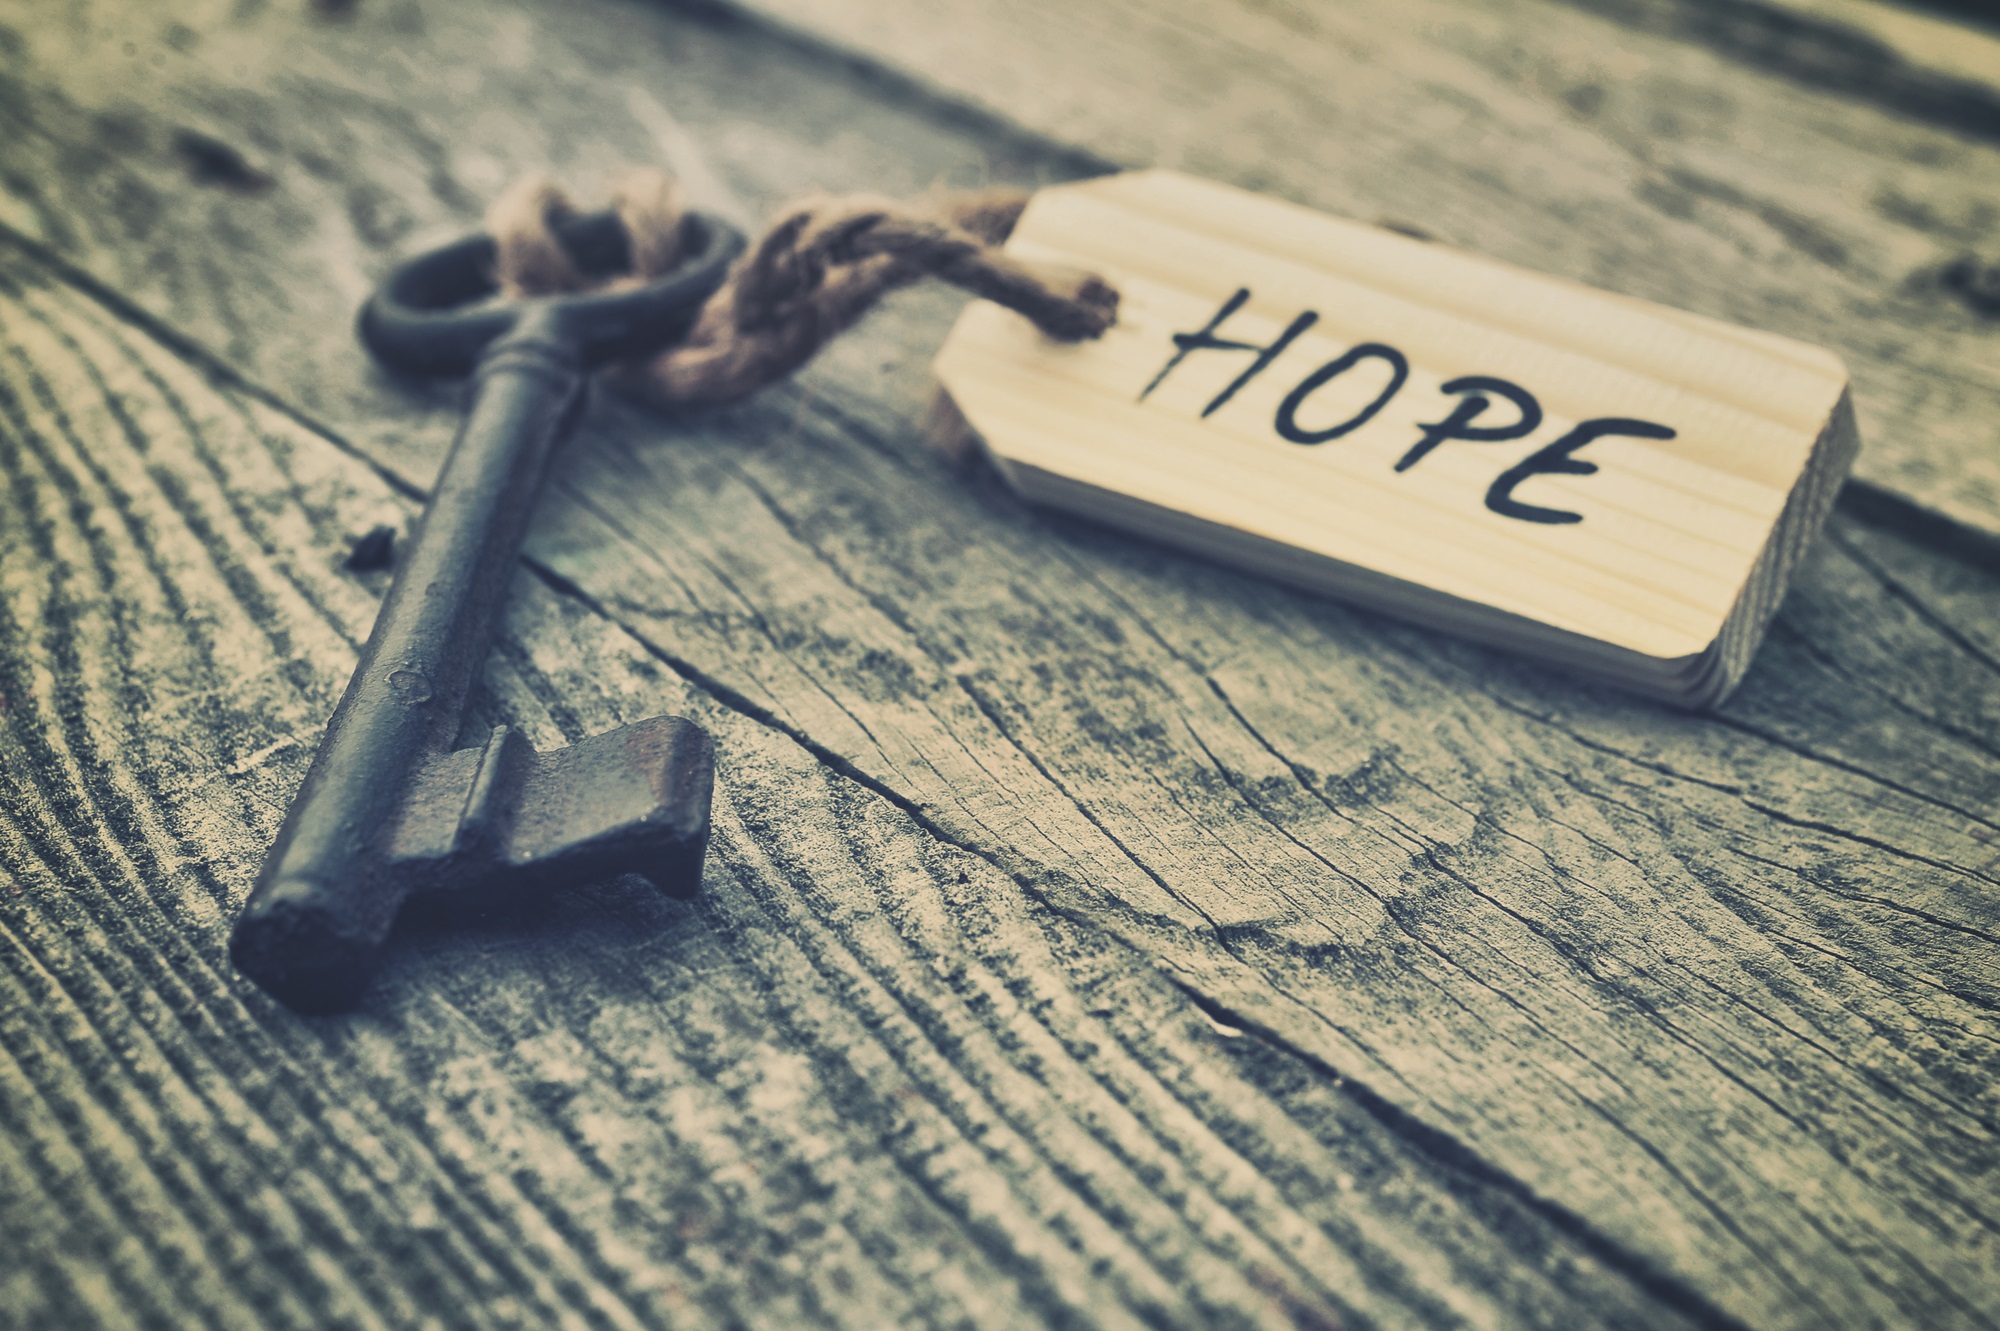 Broken by trauma, healed by hope